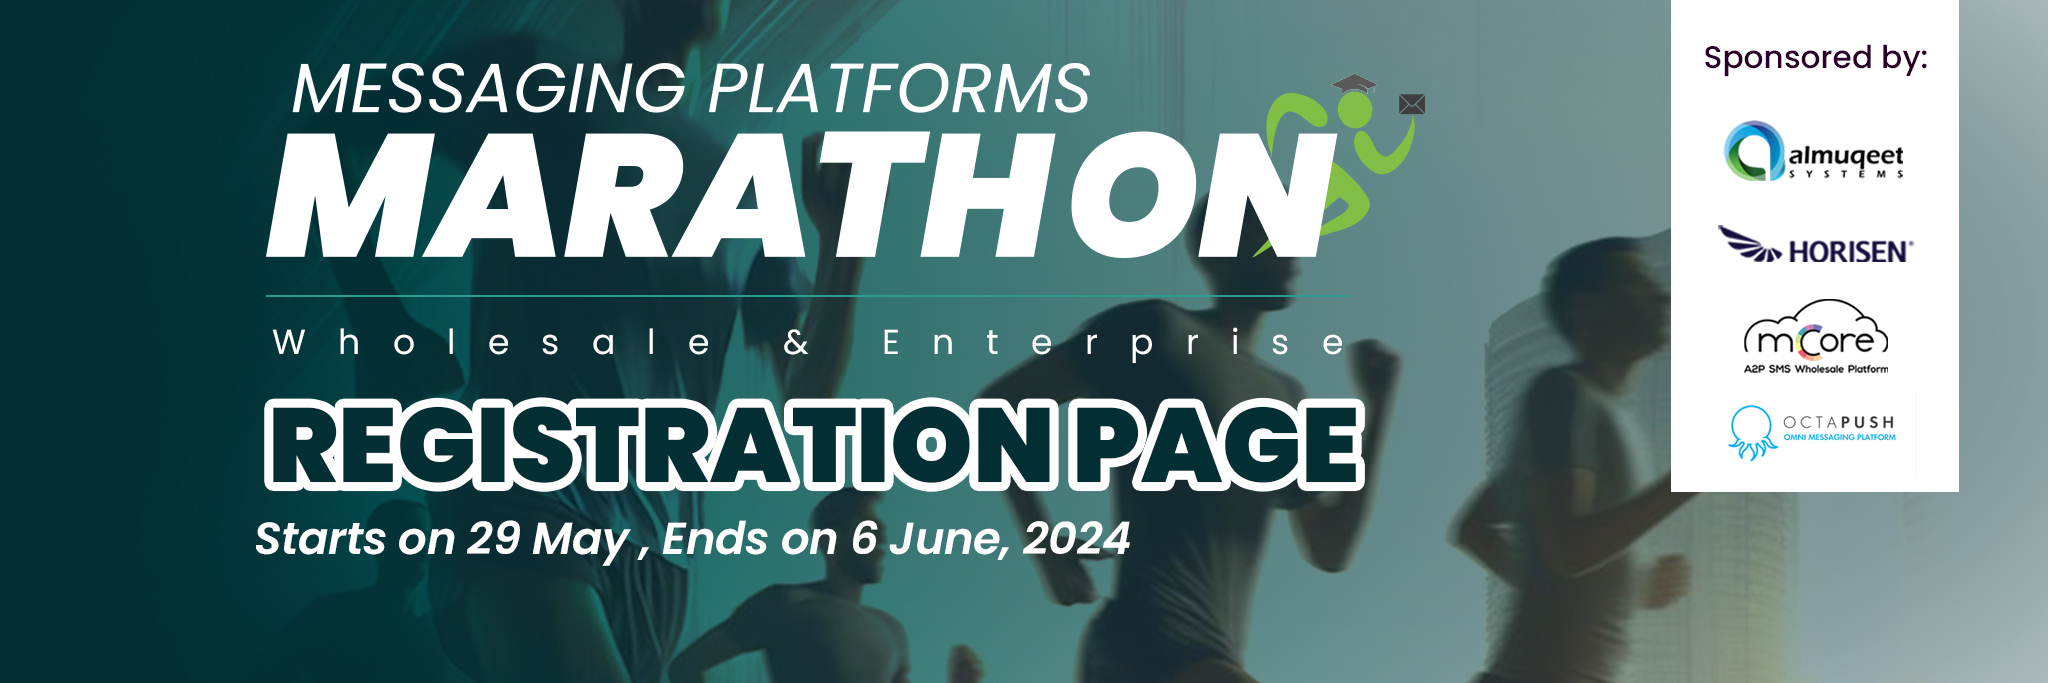 Messaging platform marathon MoreThan160